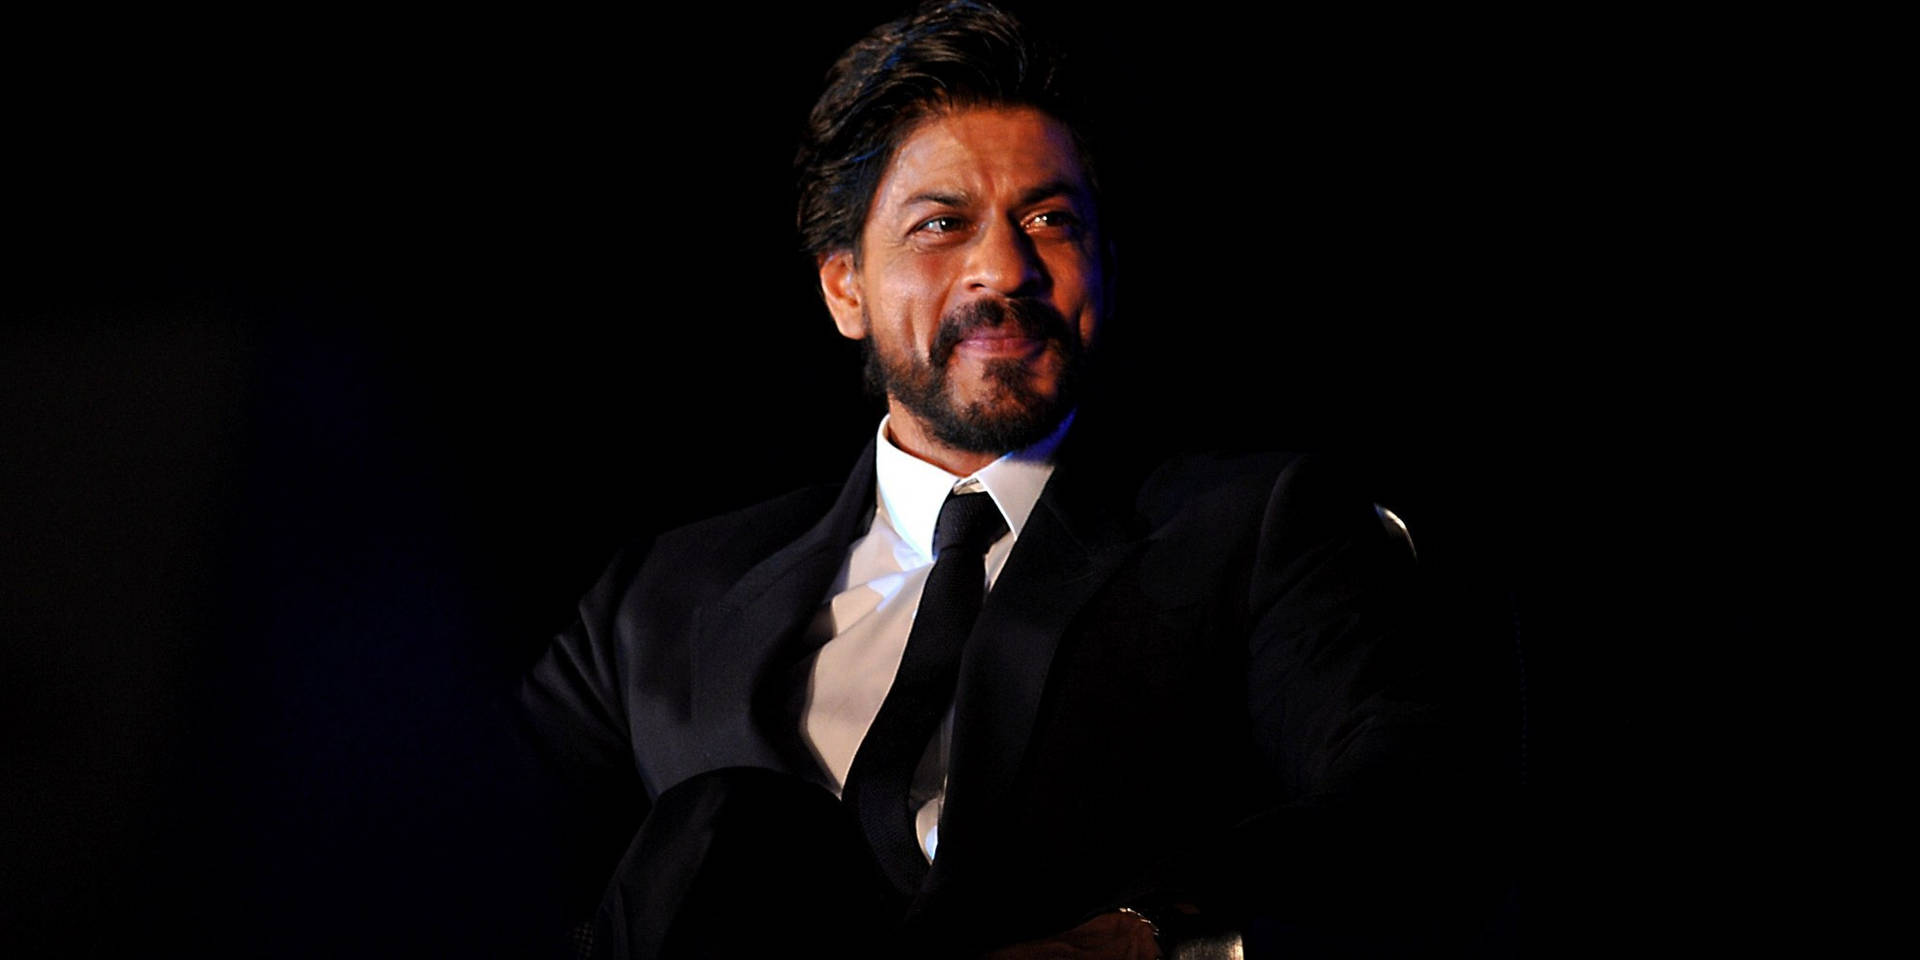 Shah Rukh Khan In Tuxedo Background